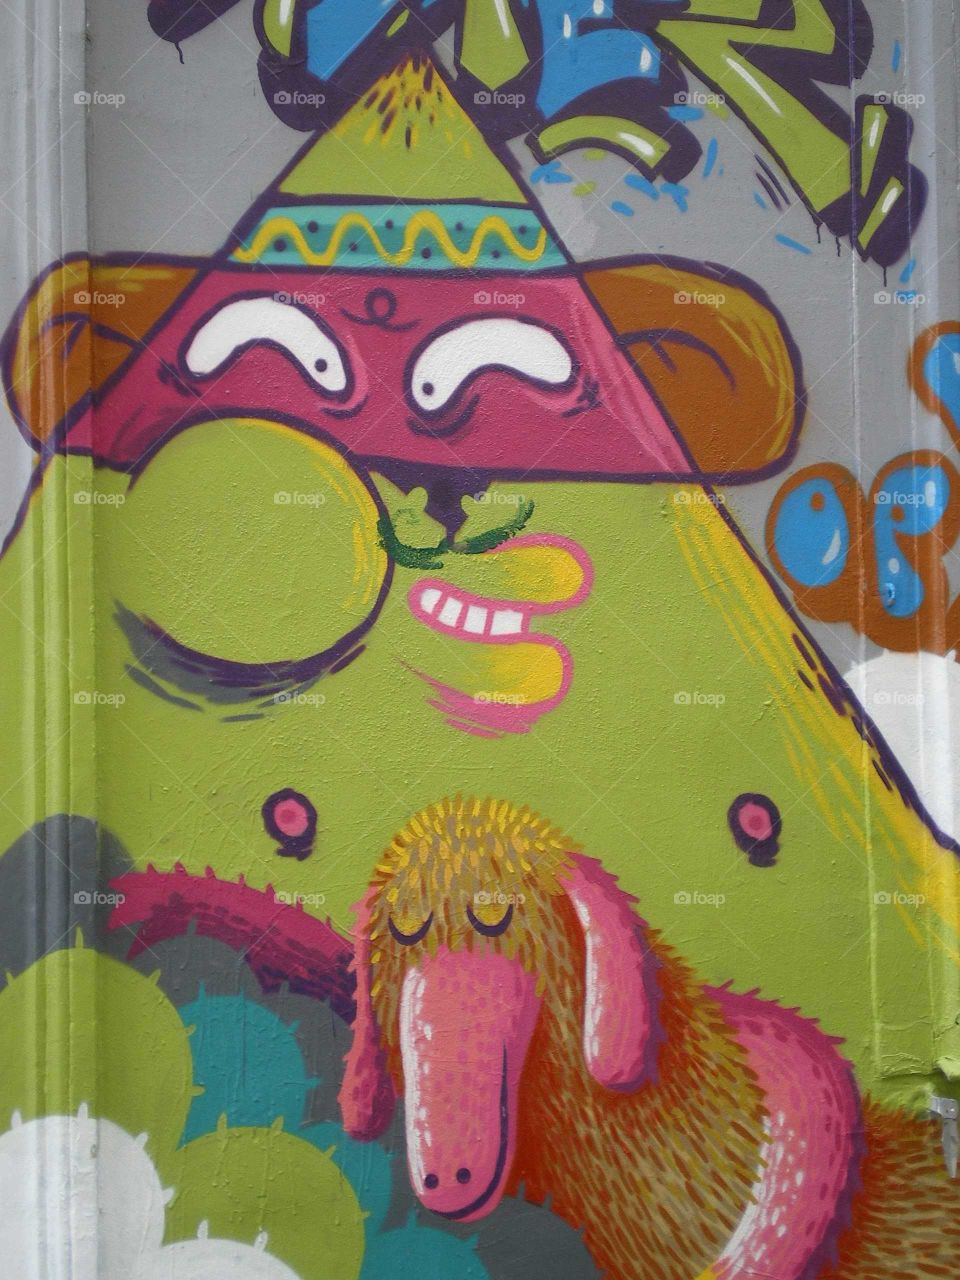 Street art in Paris, France